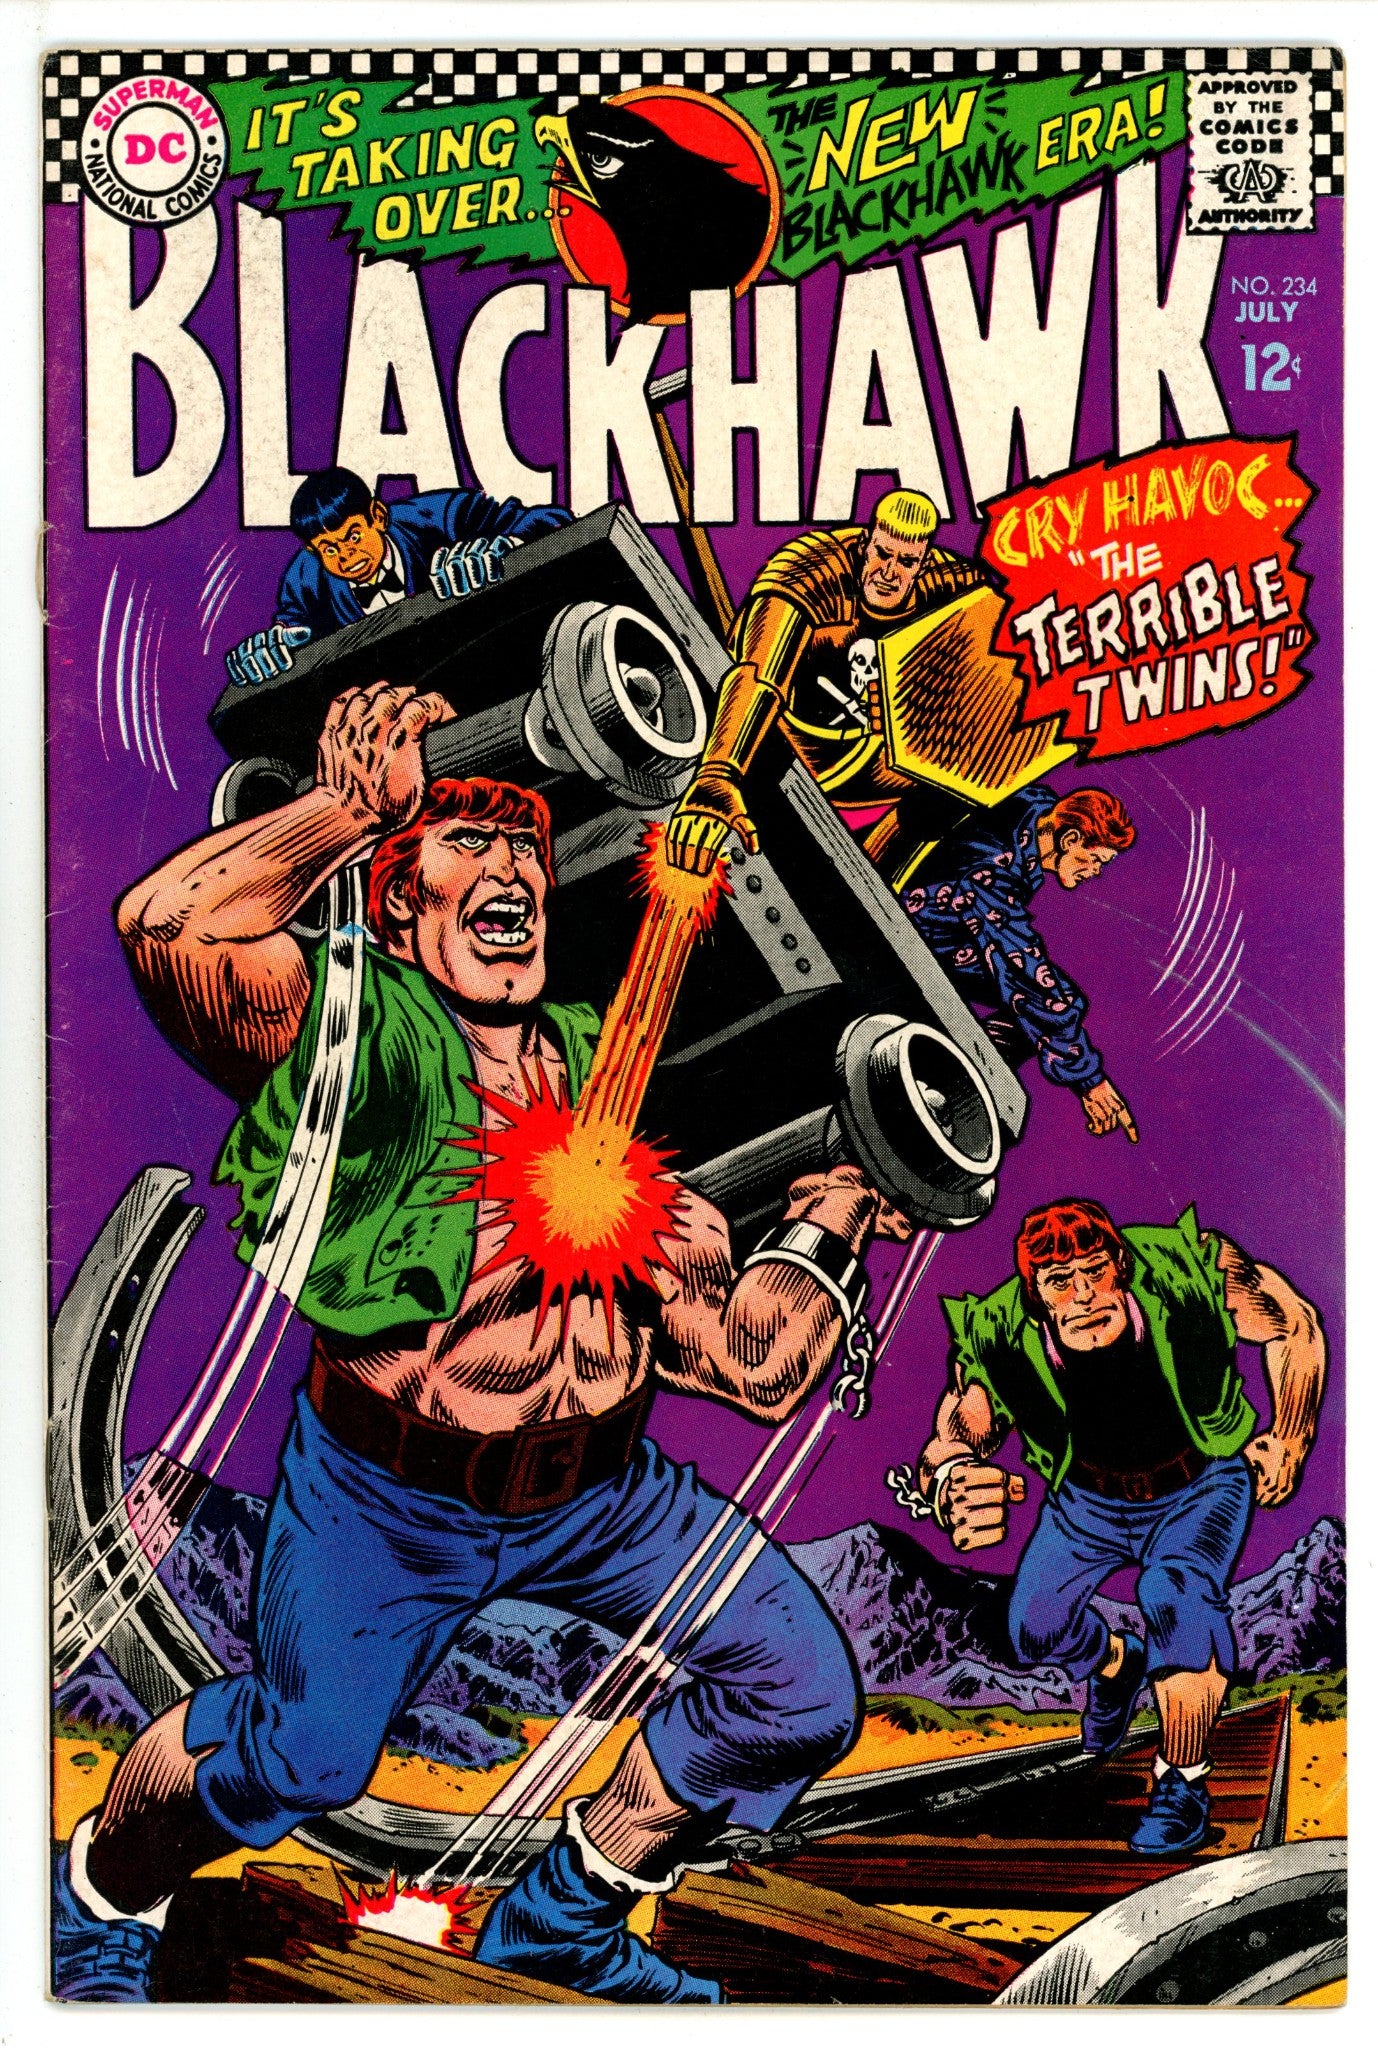 Blackhawk Vol 1 234 VG/FN (5.0) (1967) 